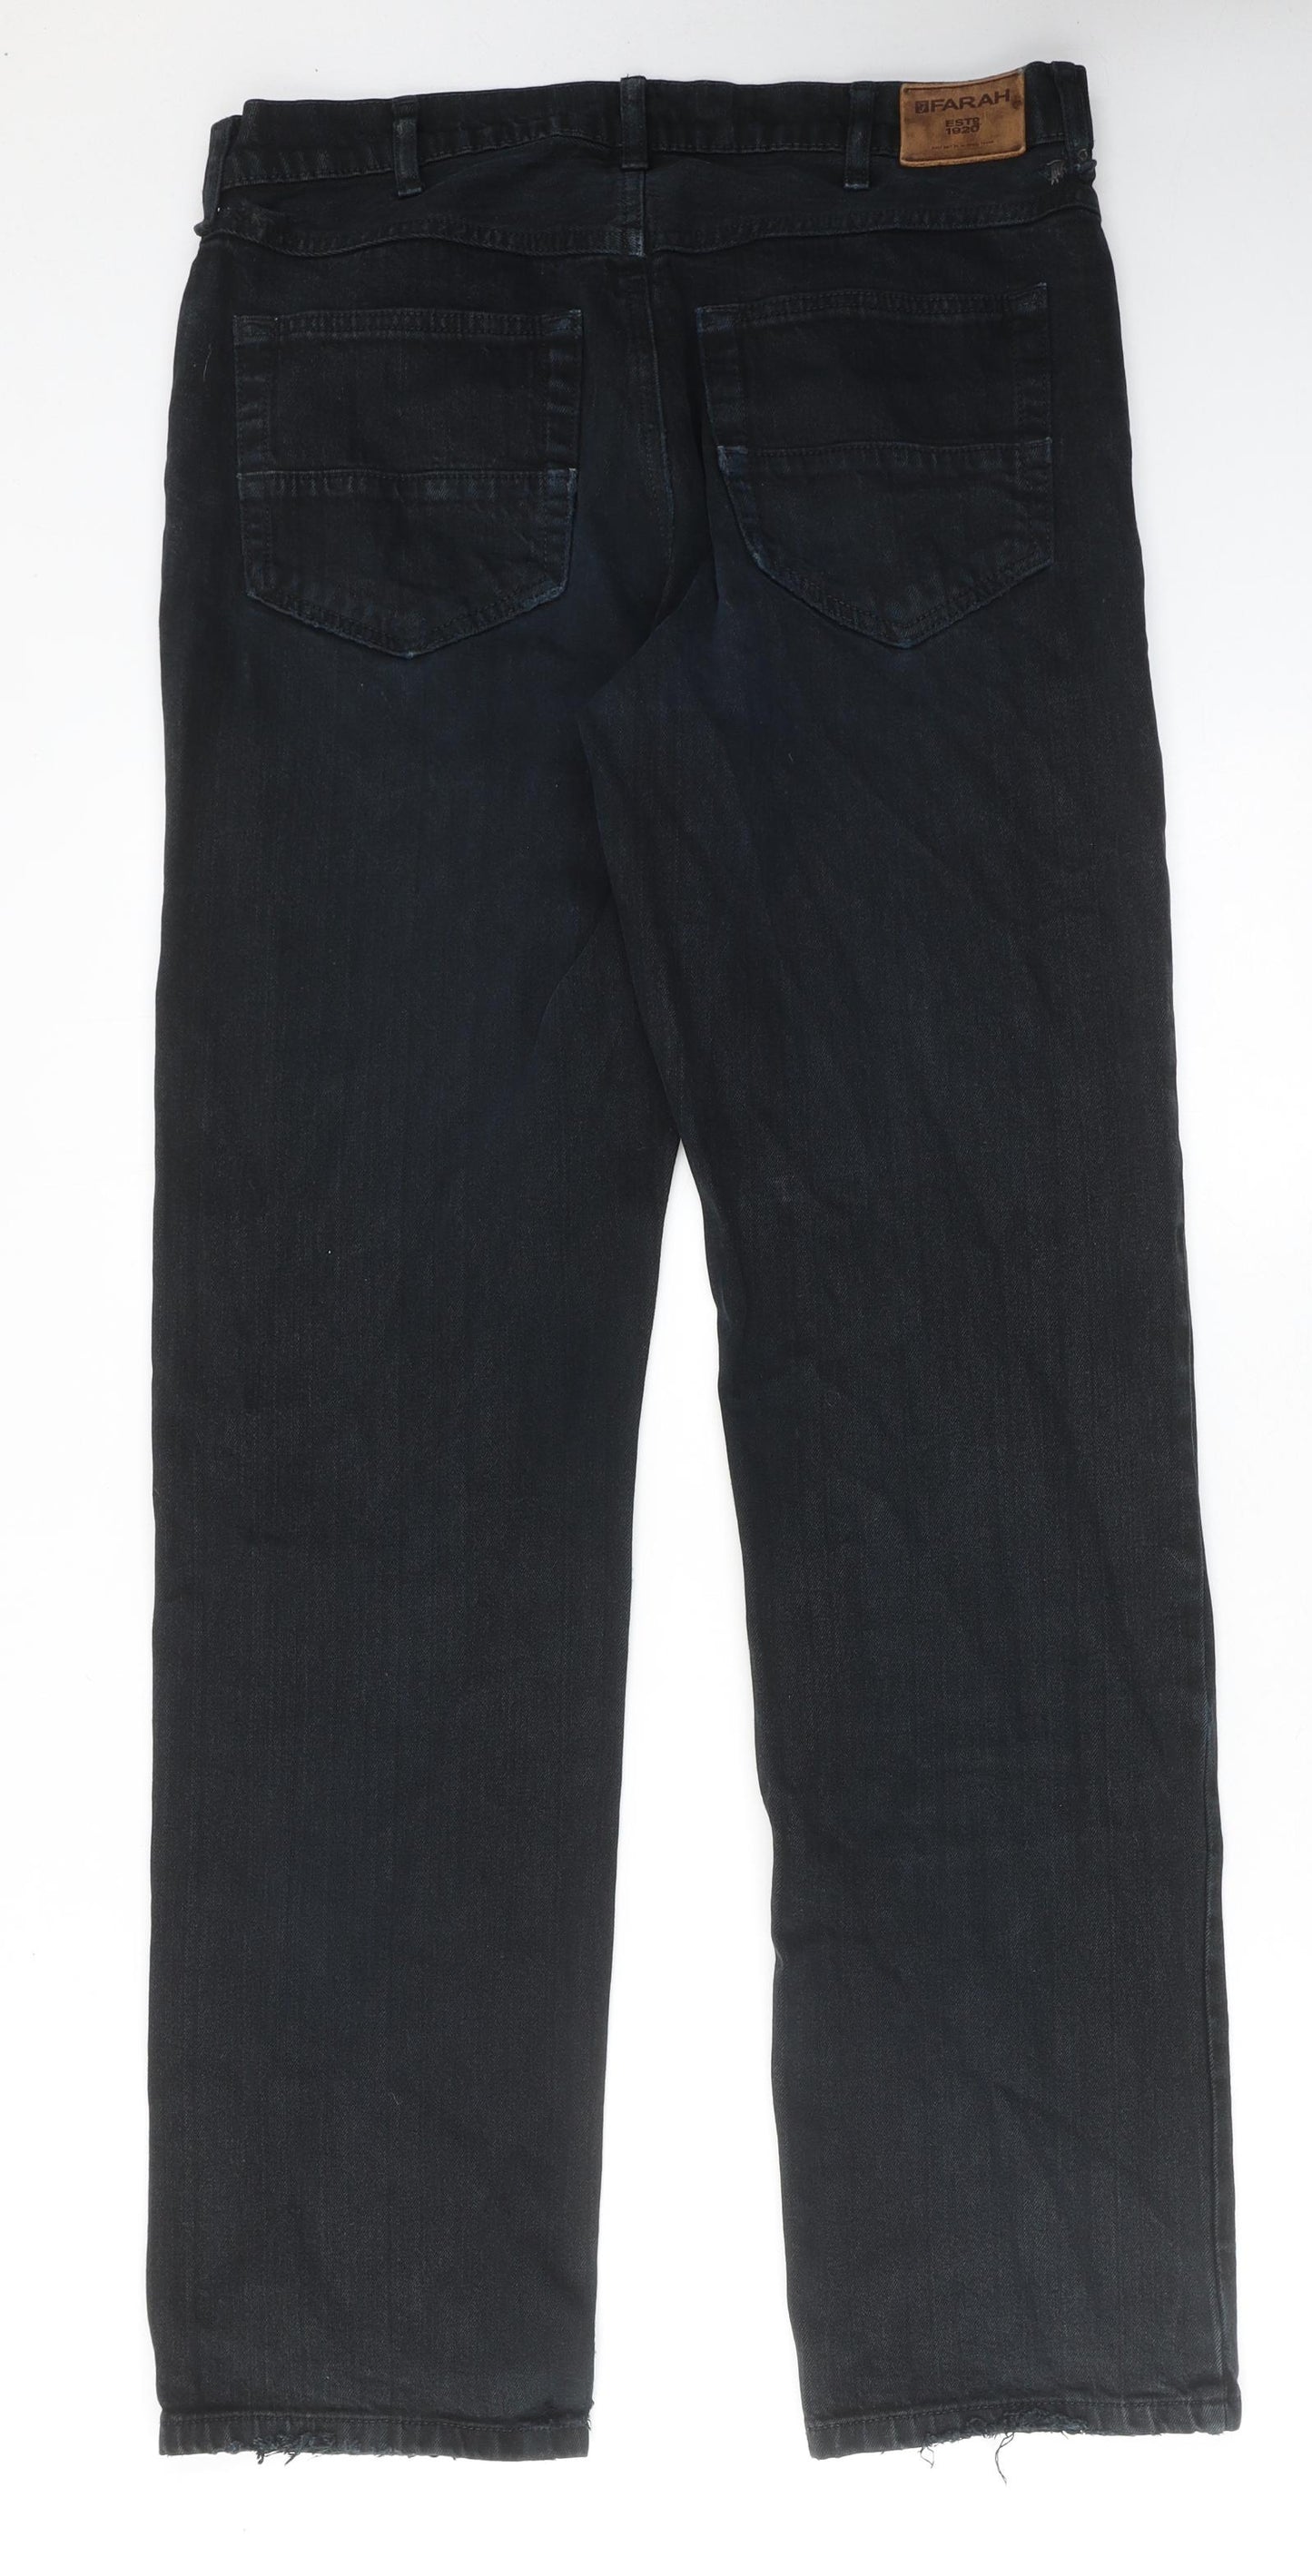 Farah Mens Black Cotton Straight Jeans Size 34 in L34 in Regular Zip